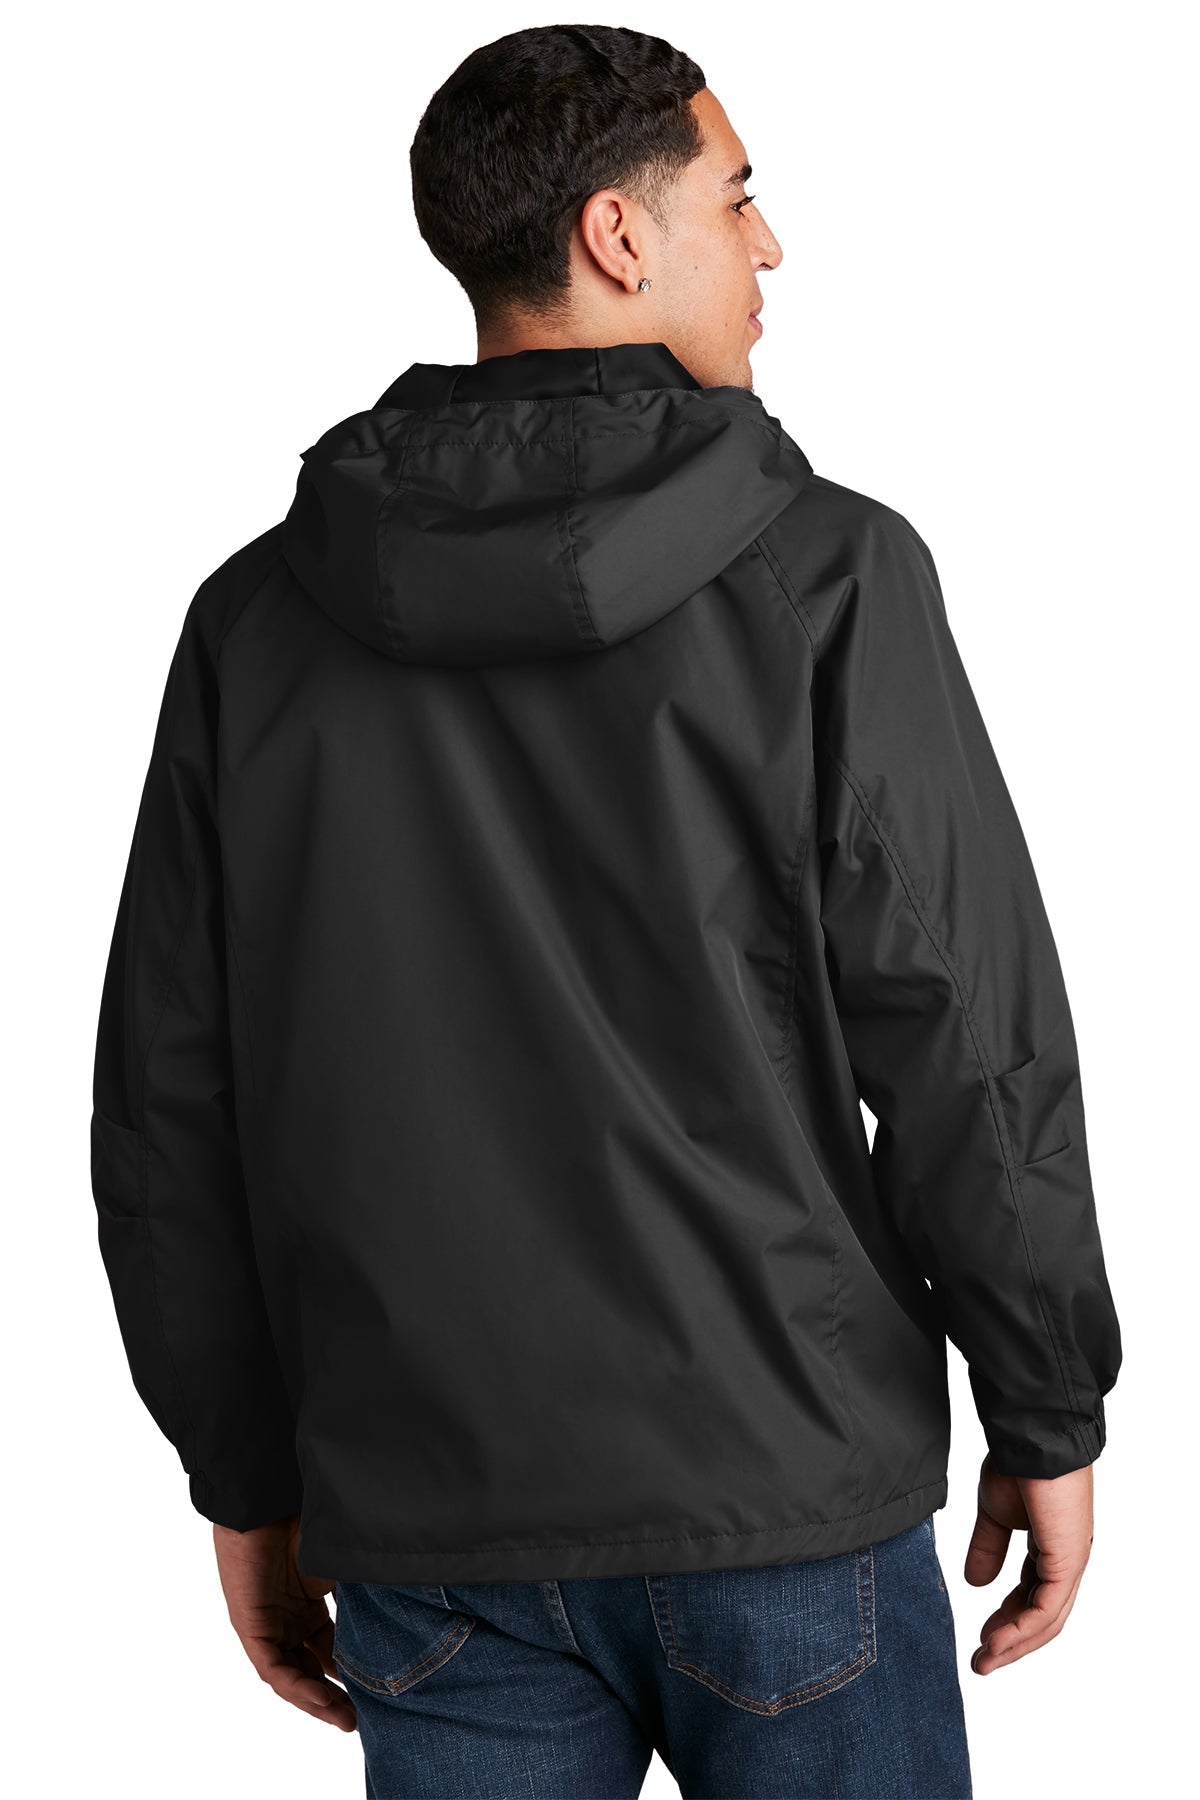 sport-tek_jst73 _black_company_logo_jackets